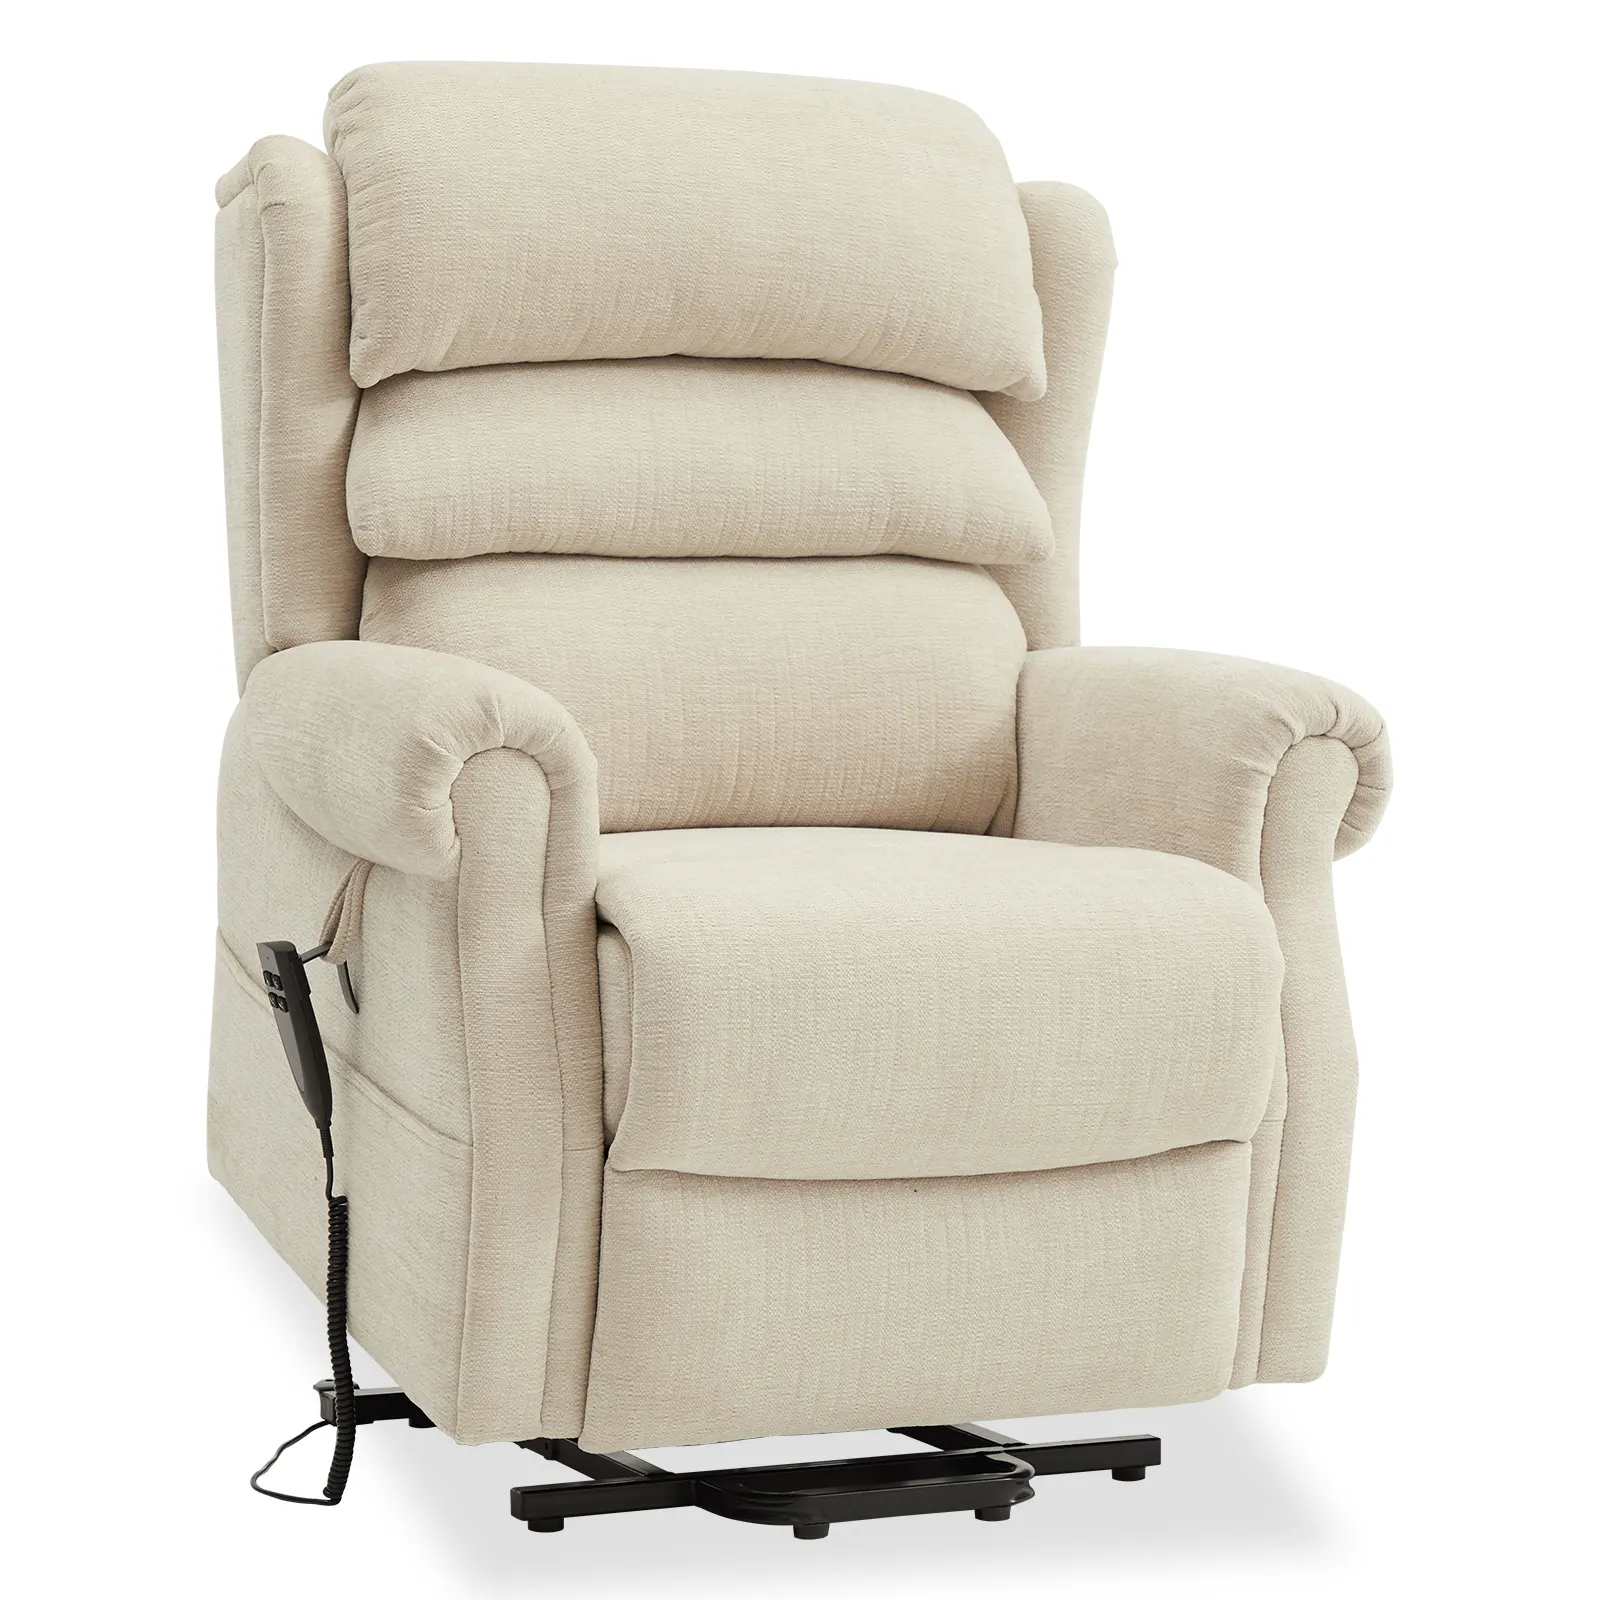 CJSmart Home Lift Chair Sillones reclinables Lay Flat Dual OKIN Motor Moderno Reclinable Sofá eléctrico con bolsillo lateral para ancianos